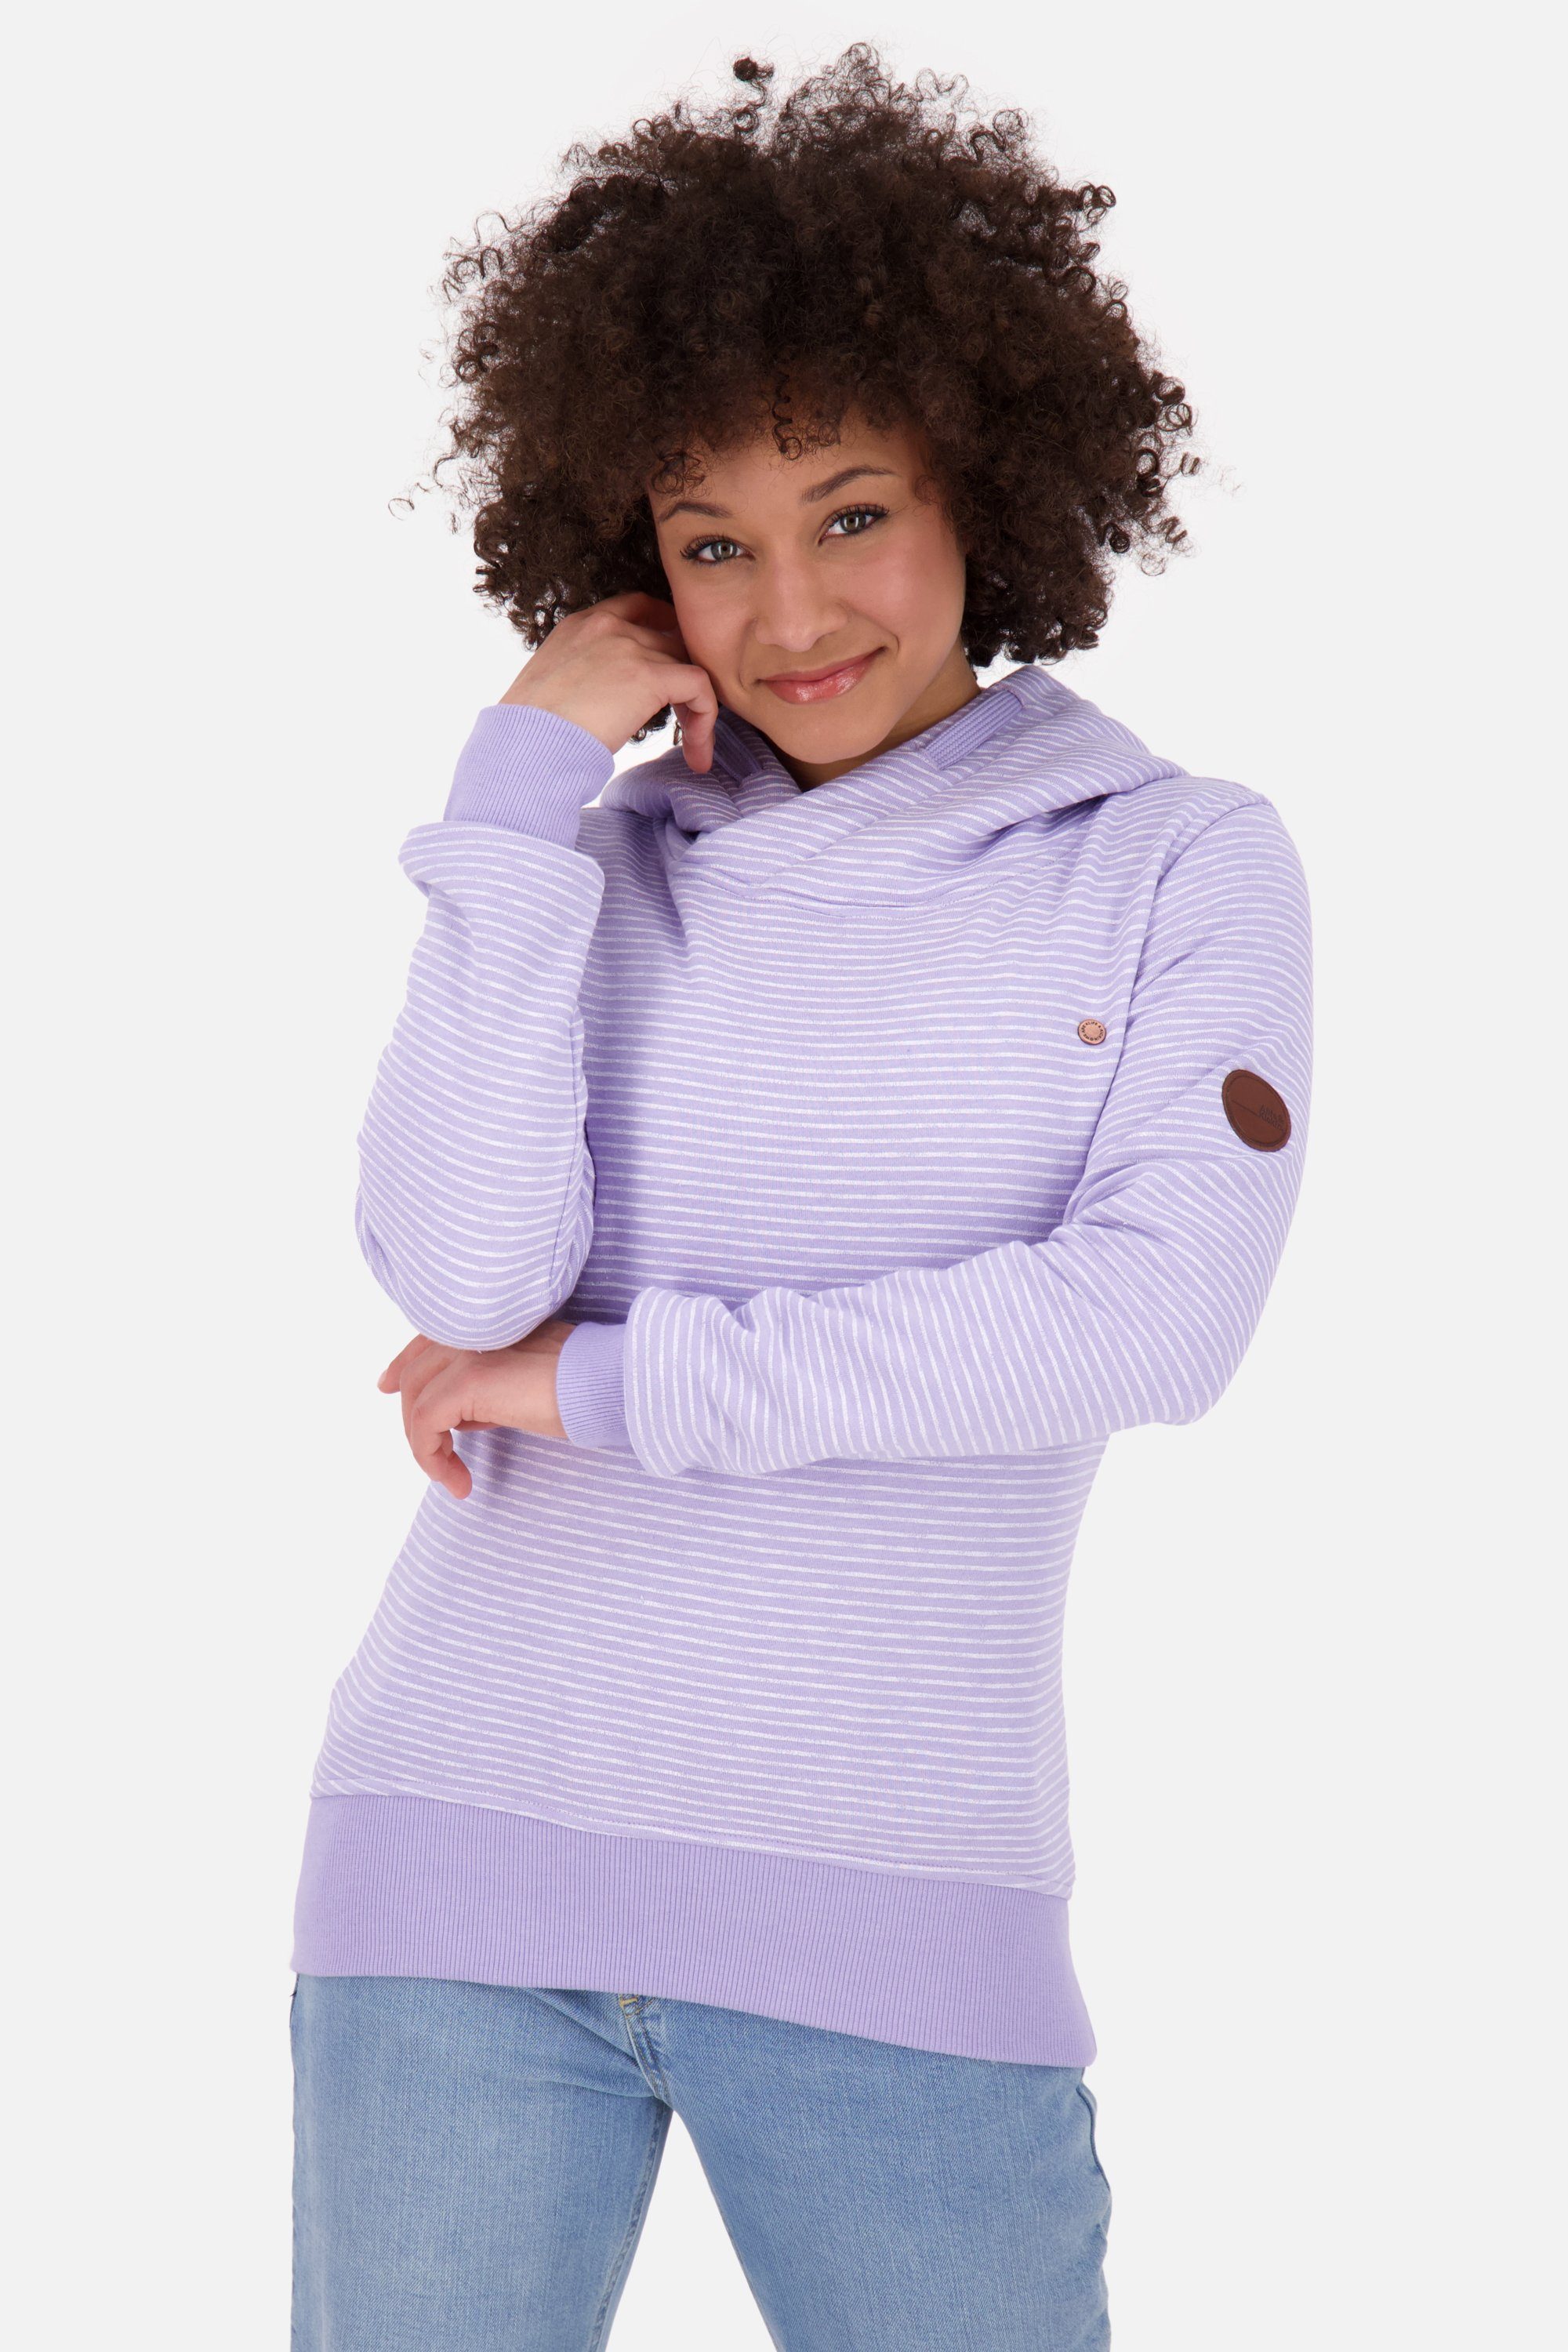 Alife Sweatshirt Pullover Z digital lavender SarinaAK Damen & Kickin Hoodie Kapuzensweatshirt Kapuzensweatshirt,